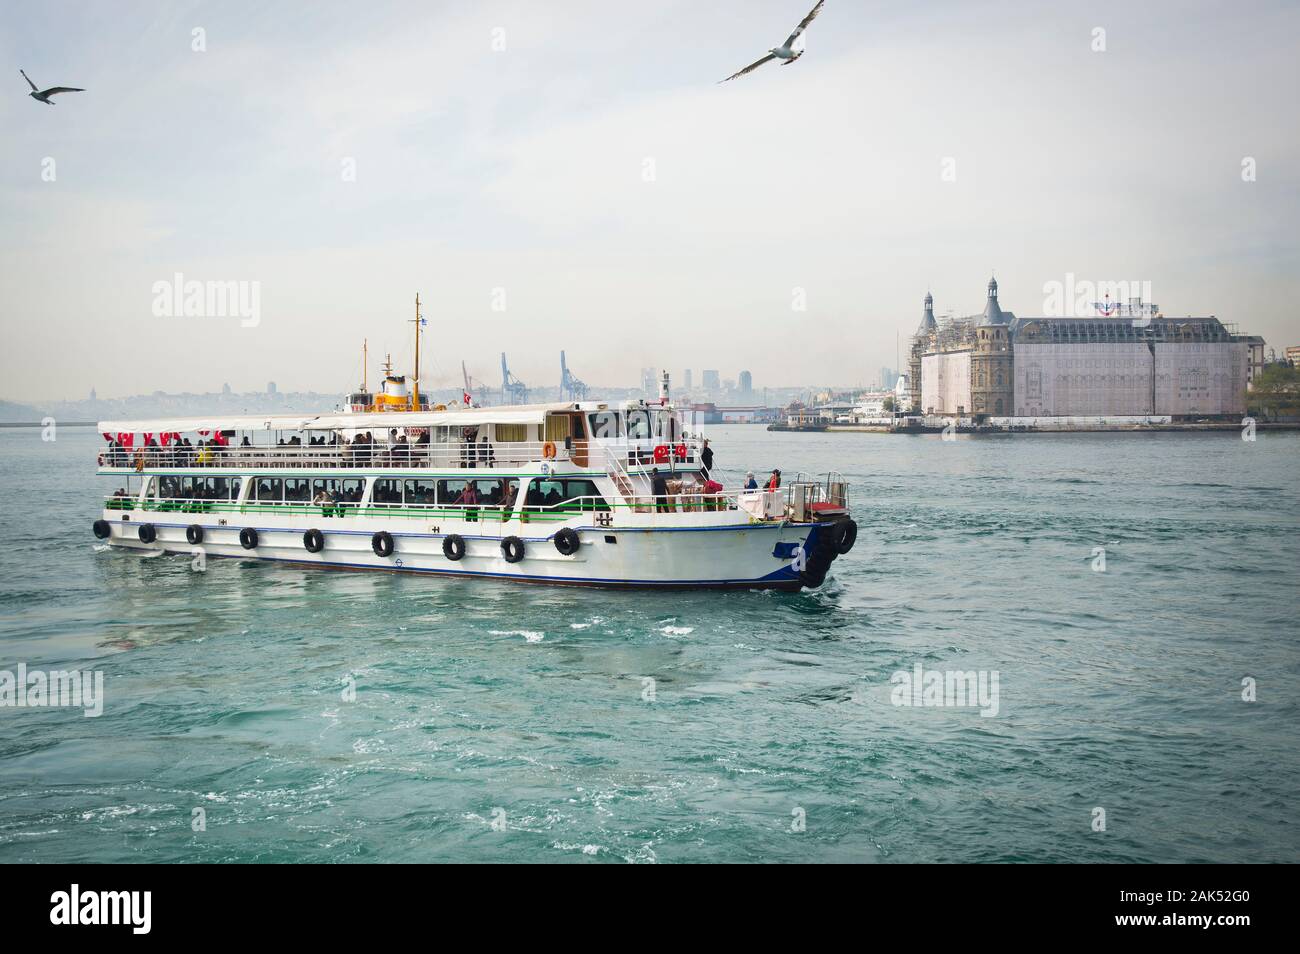 Passenger Vessel in Bosporus , Location Istanbul - Turkey Stock Photo